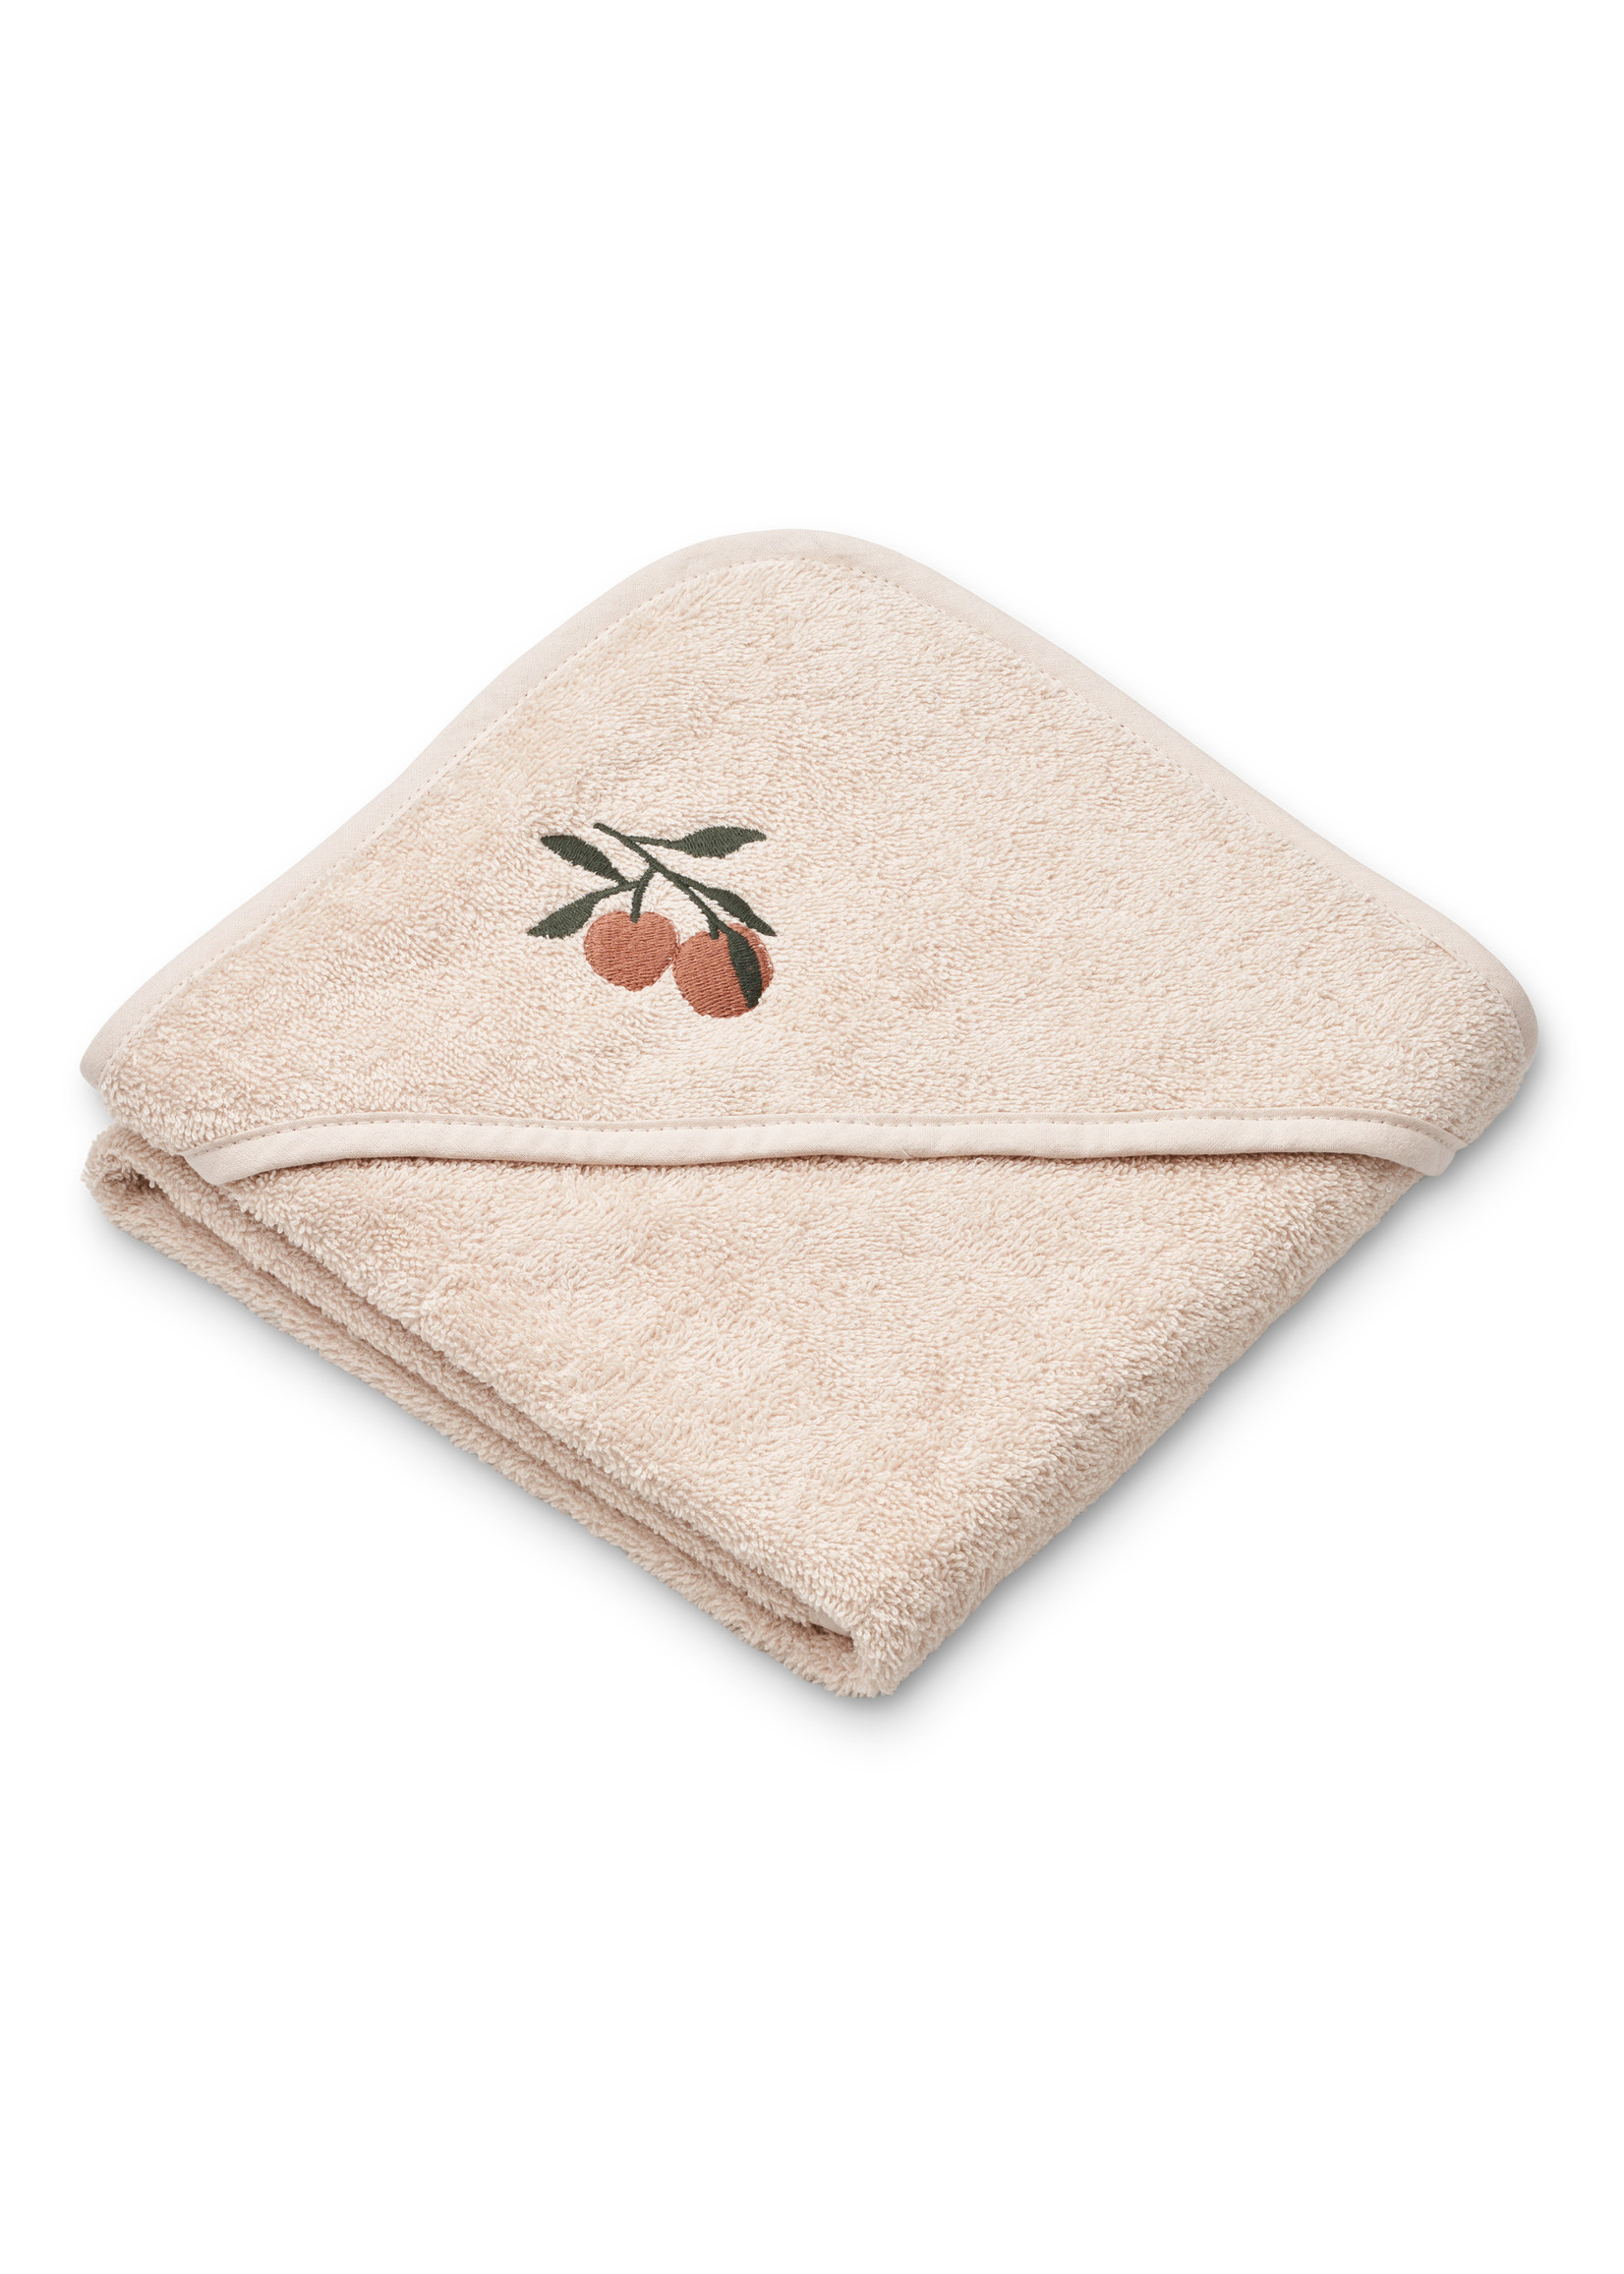 Liewood Liewood - Batu hooded baby towel - Peach / Sea shell